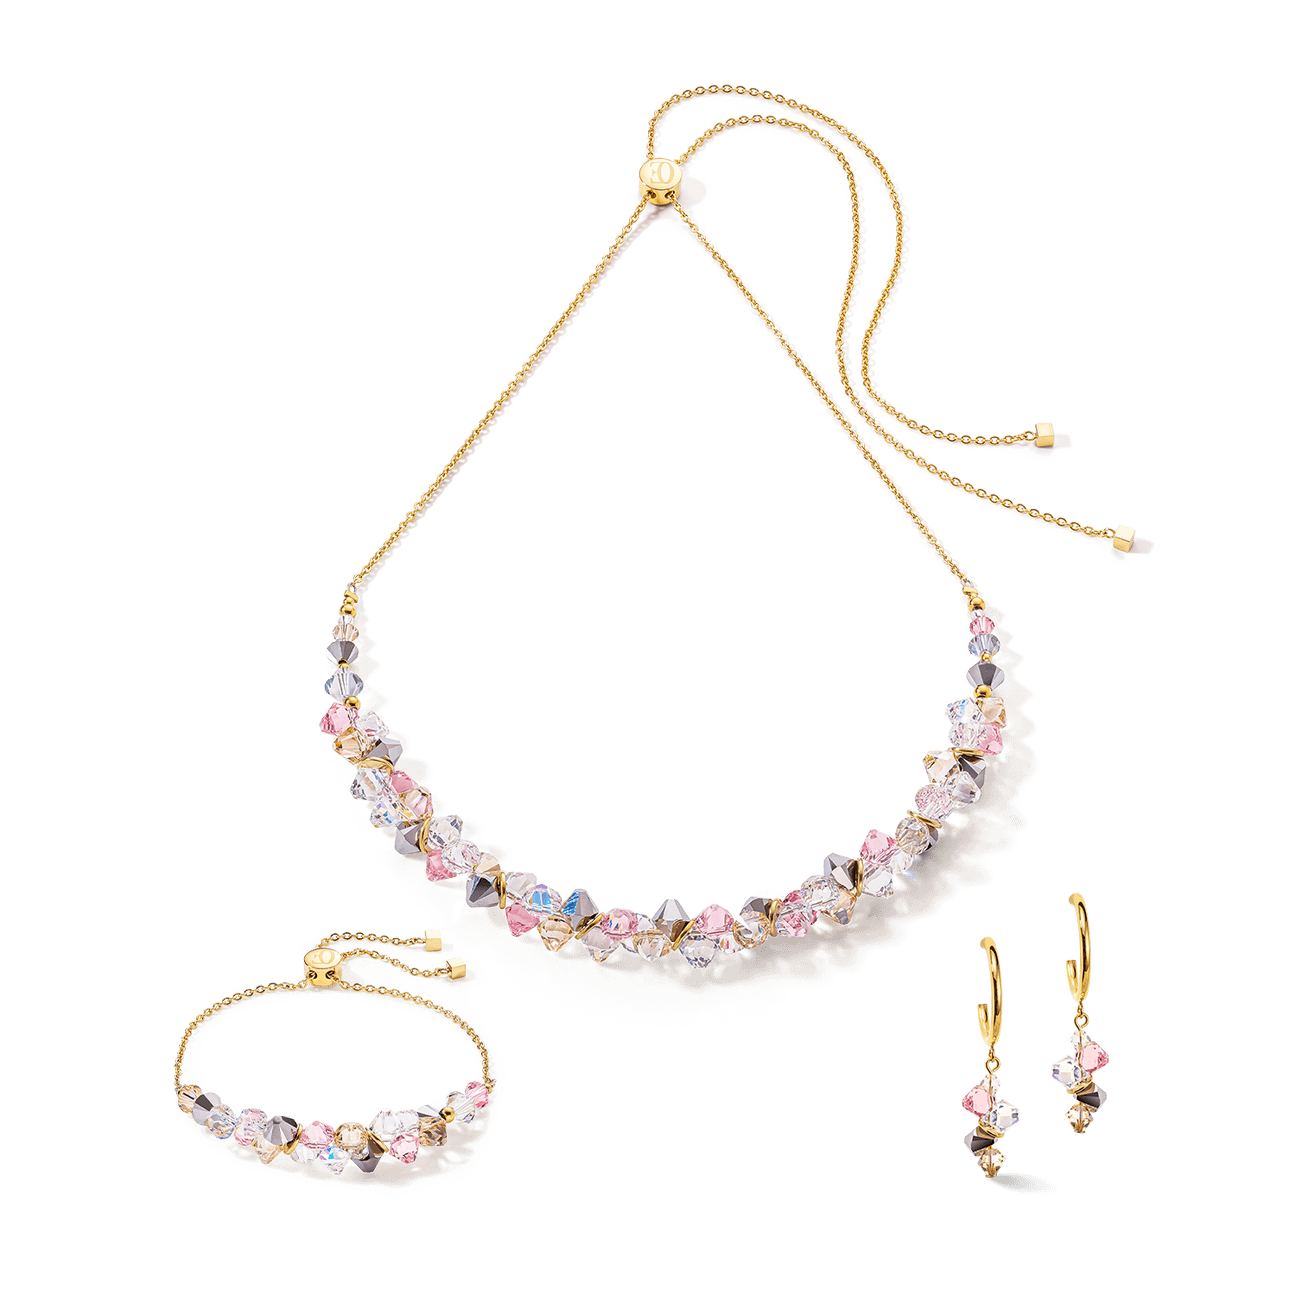 Coeur de Lion Gold Plated Light Rose Dancing Crystals Bracelet - Rococo Jewellery